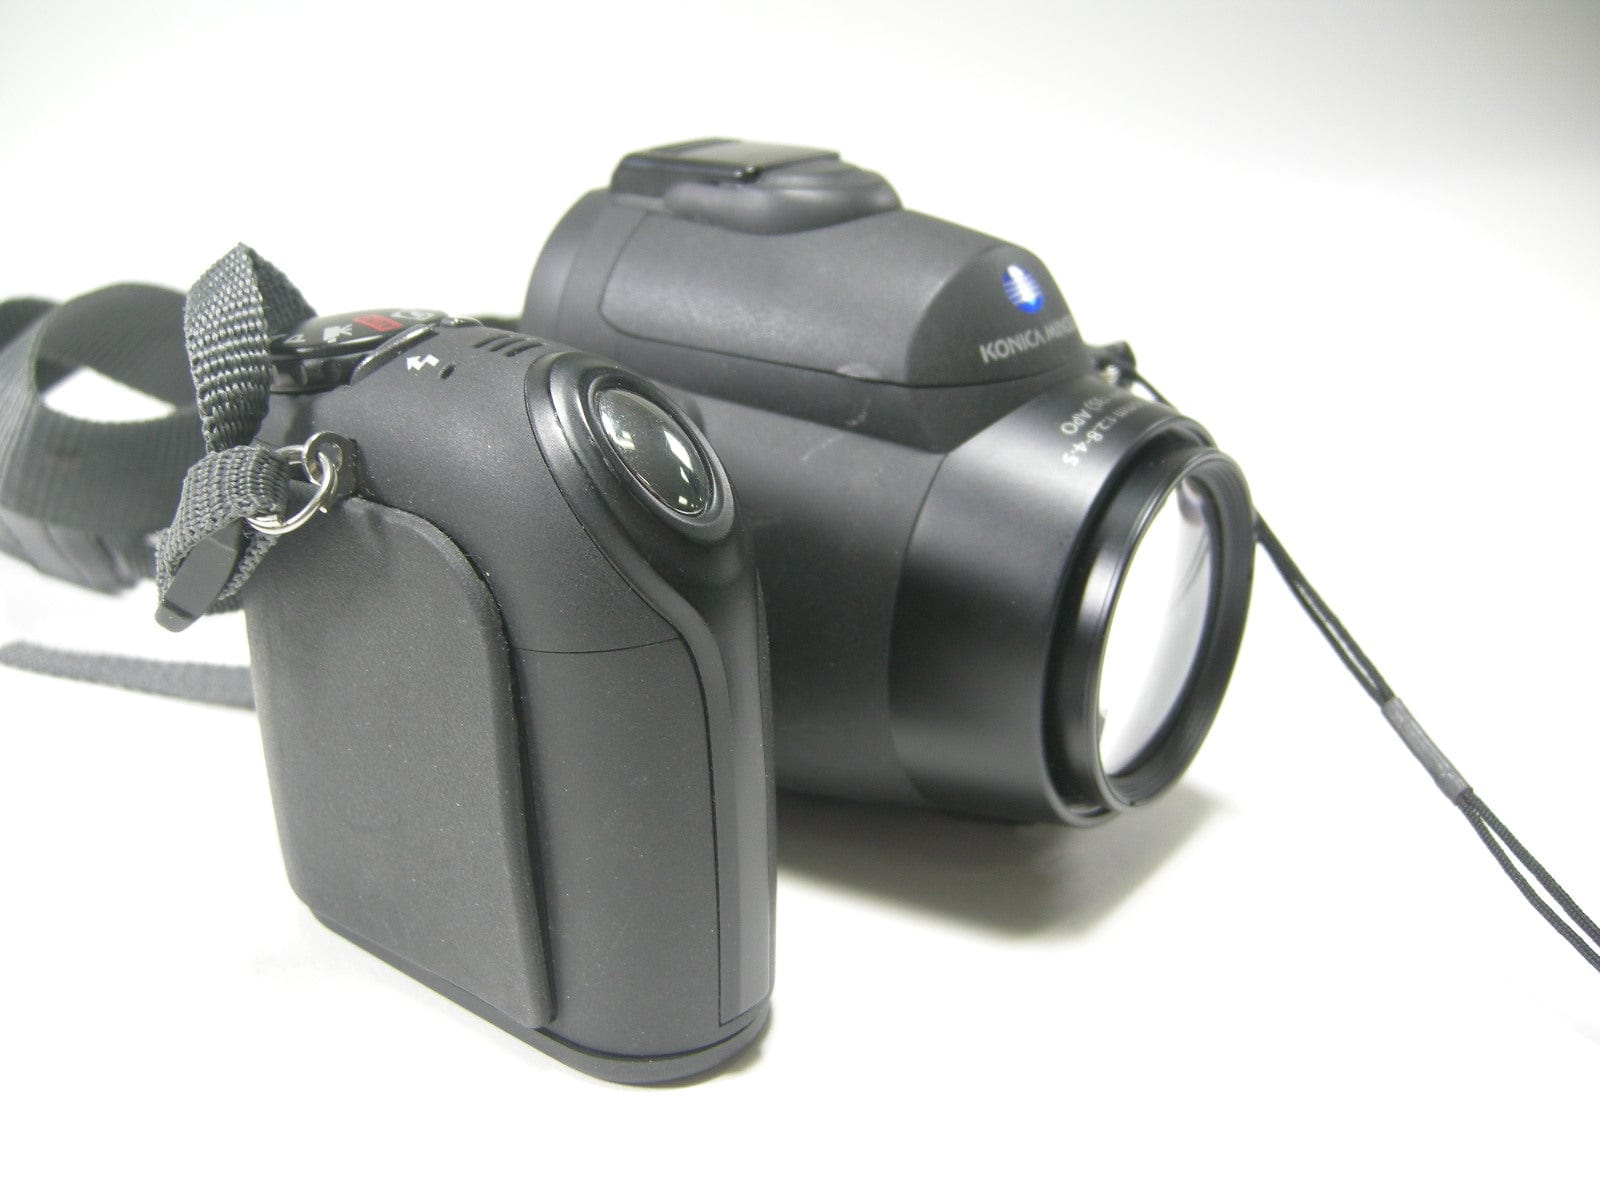 Konica-Minolta DiMage Z3 4.0mp Digital camera